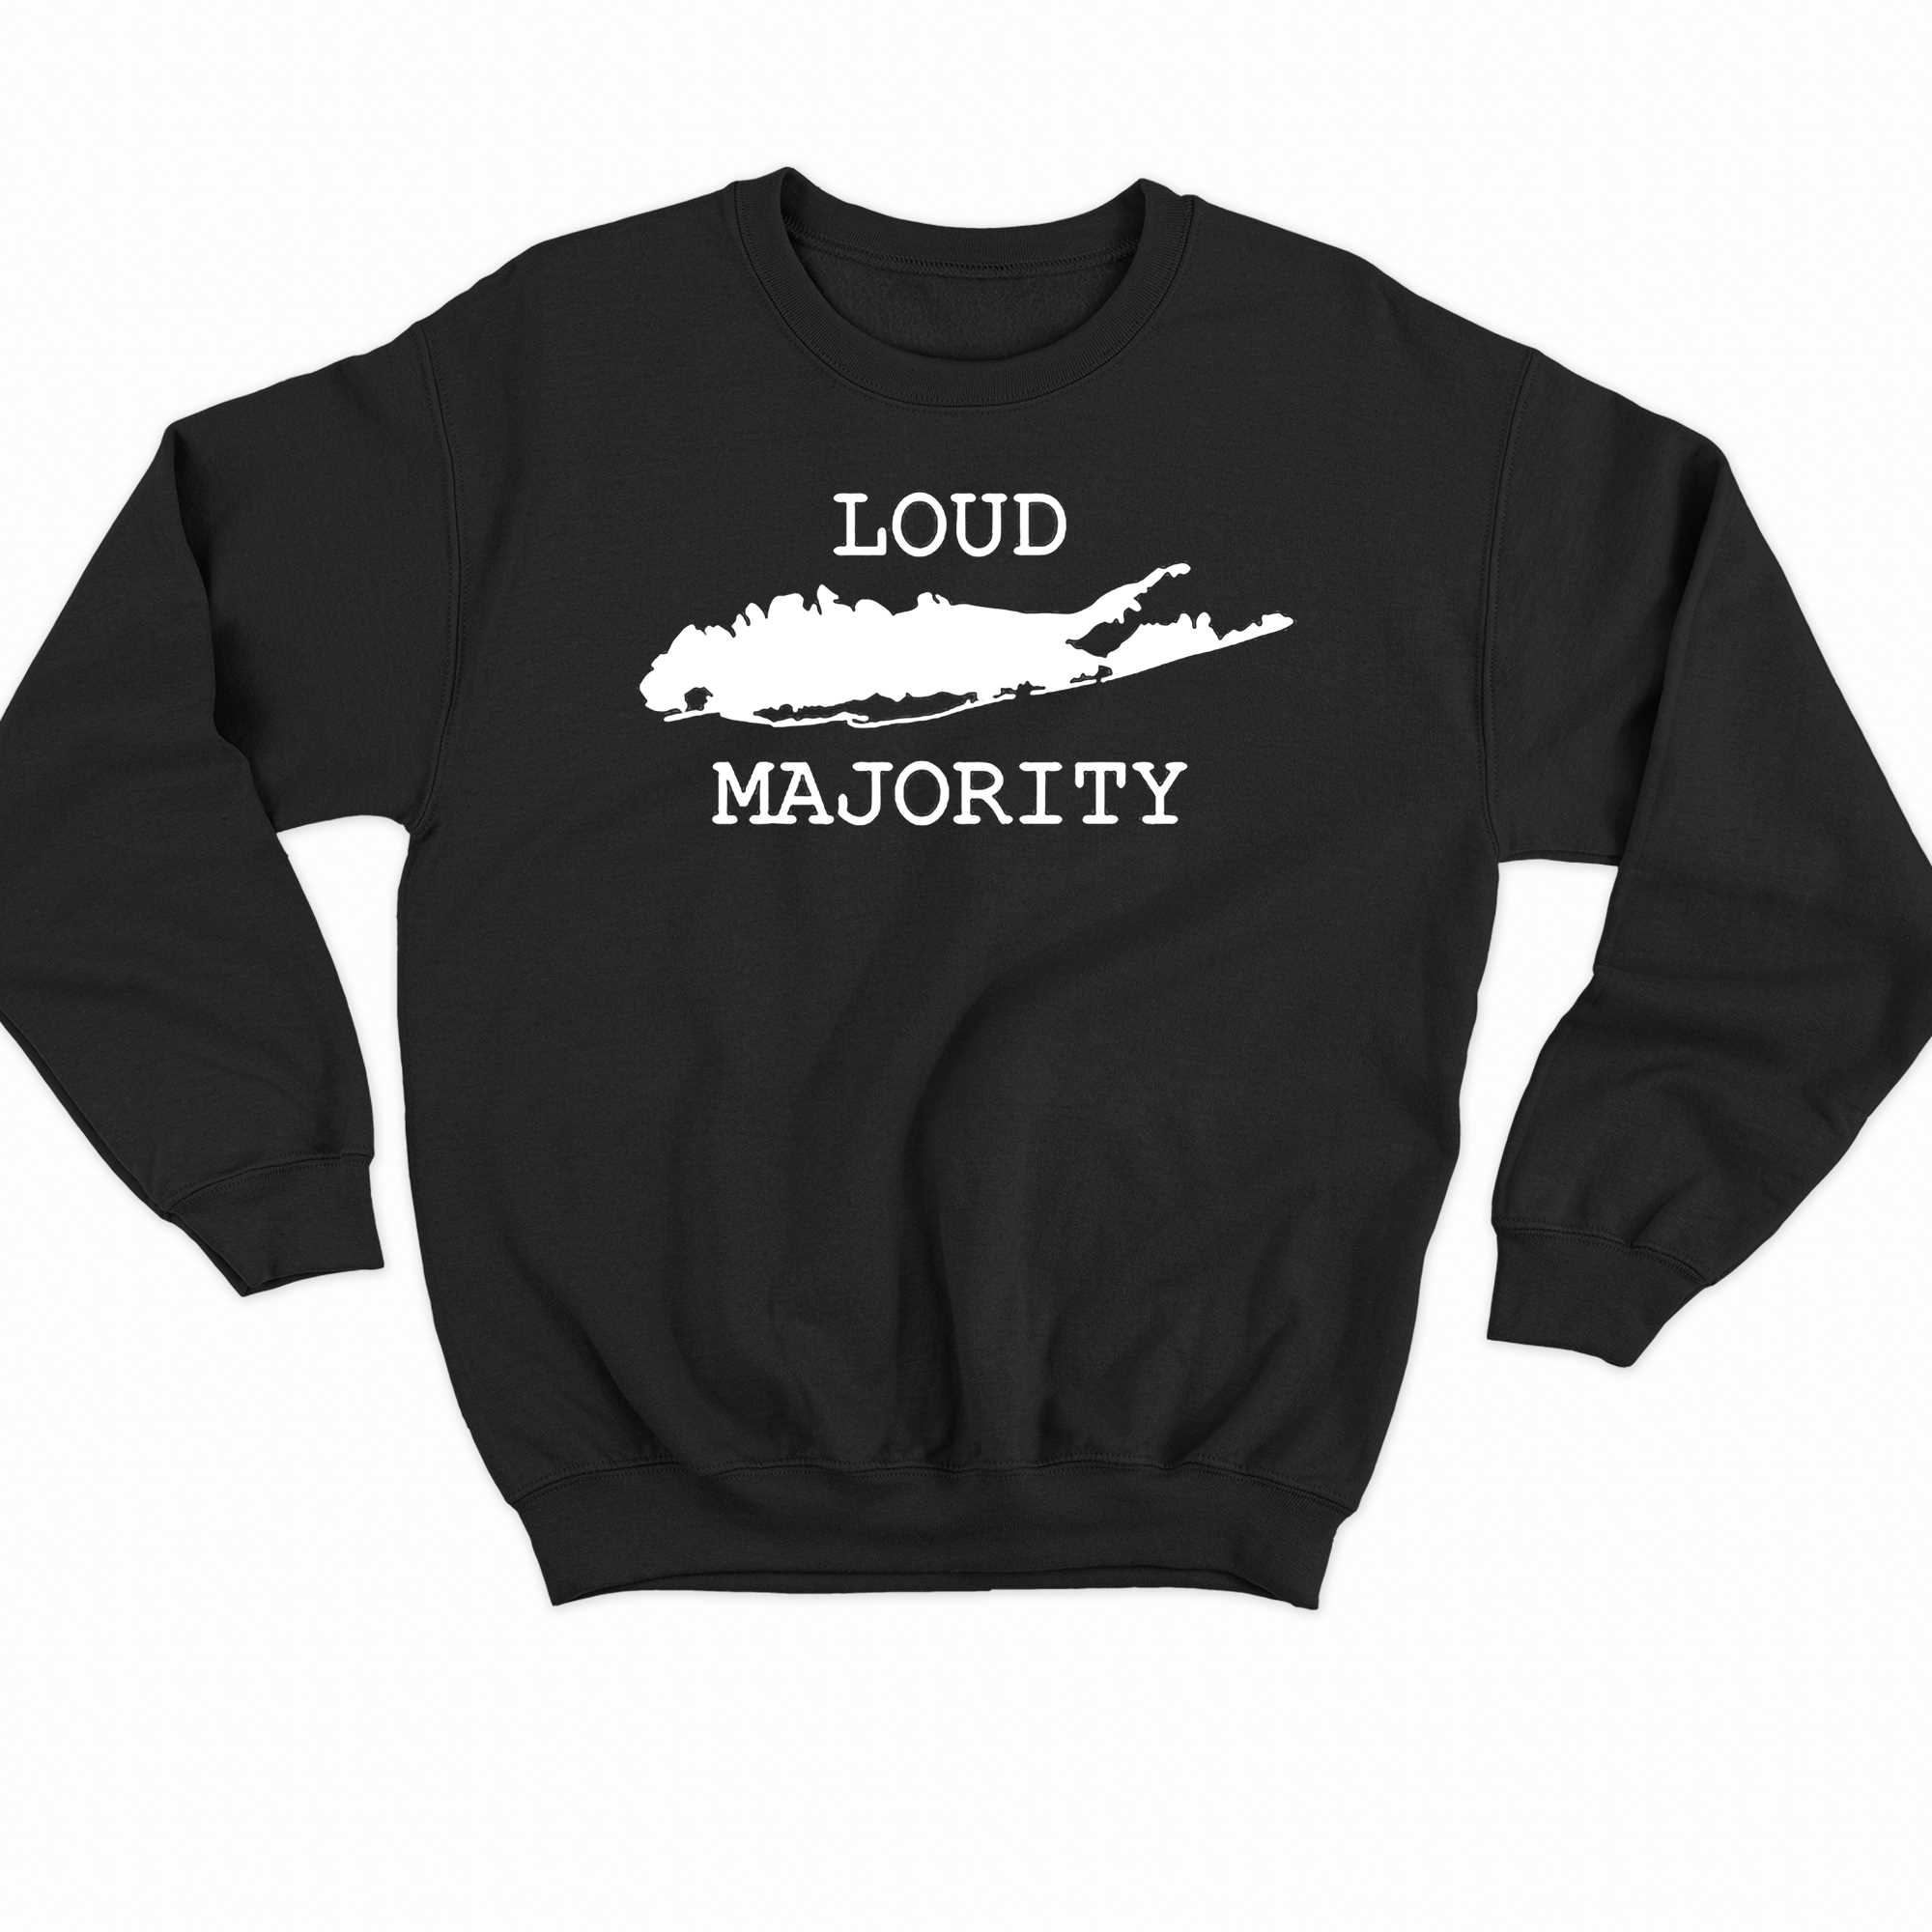 Scott Presler Li Loud Majority T-shirt 